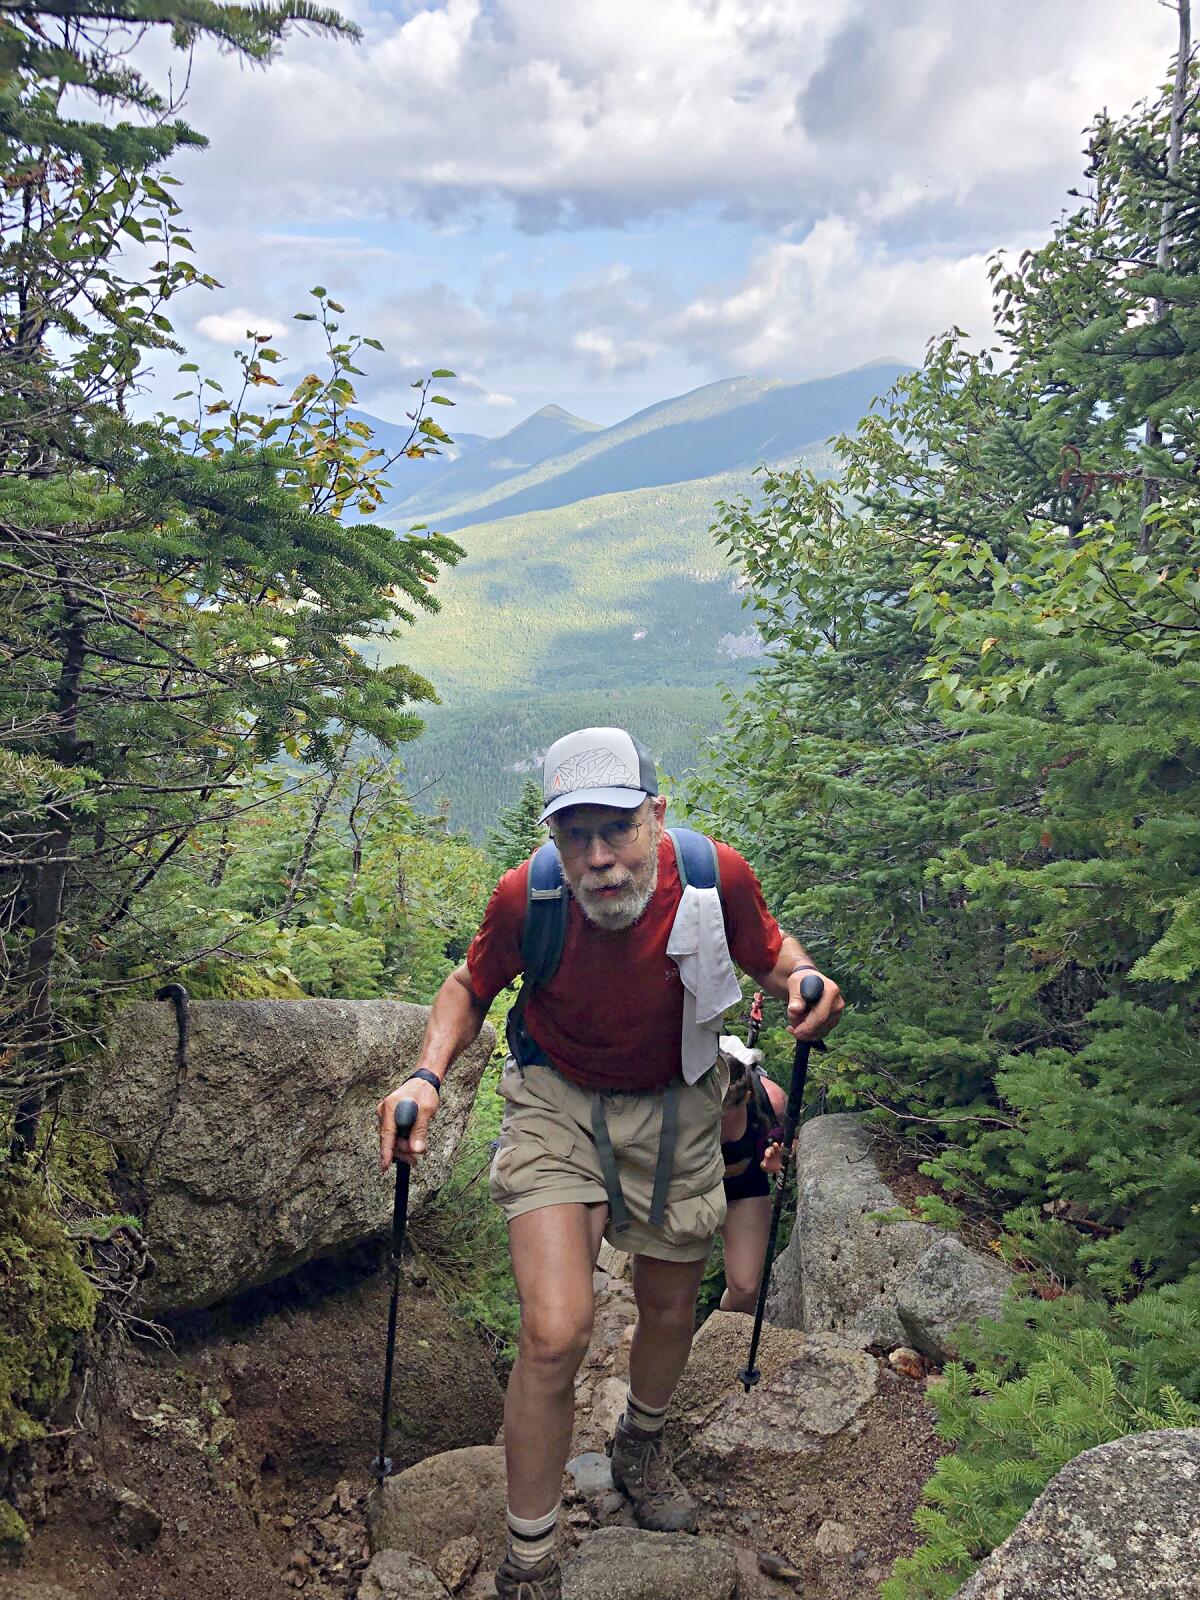 A man hikes up a mountain